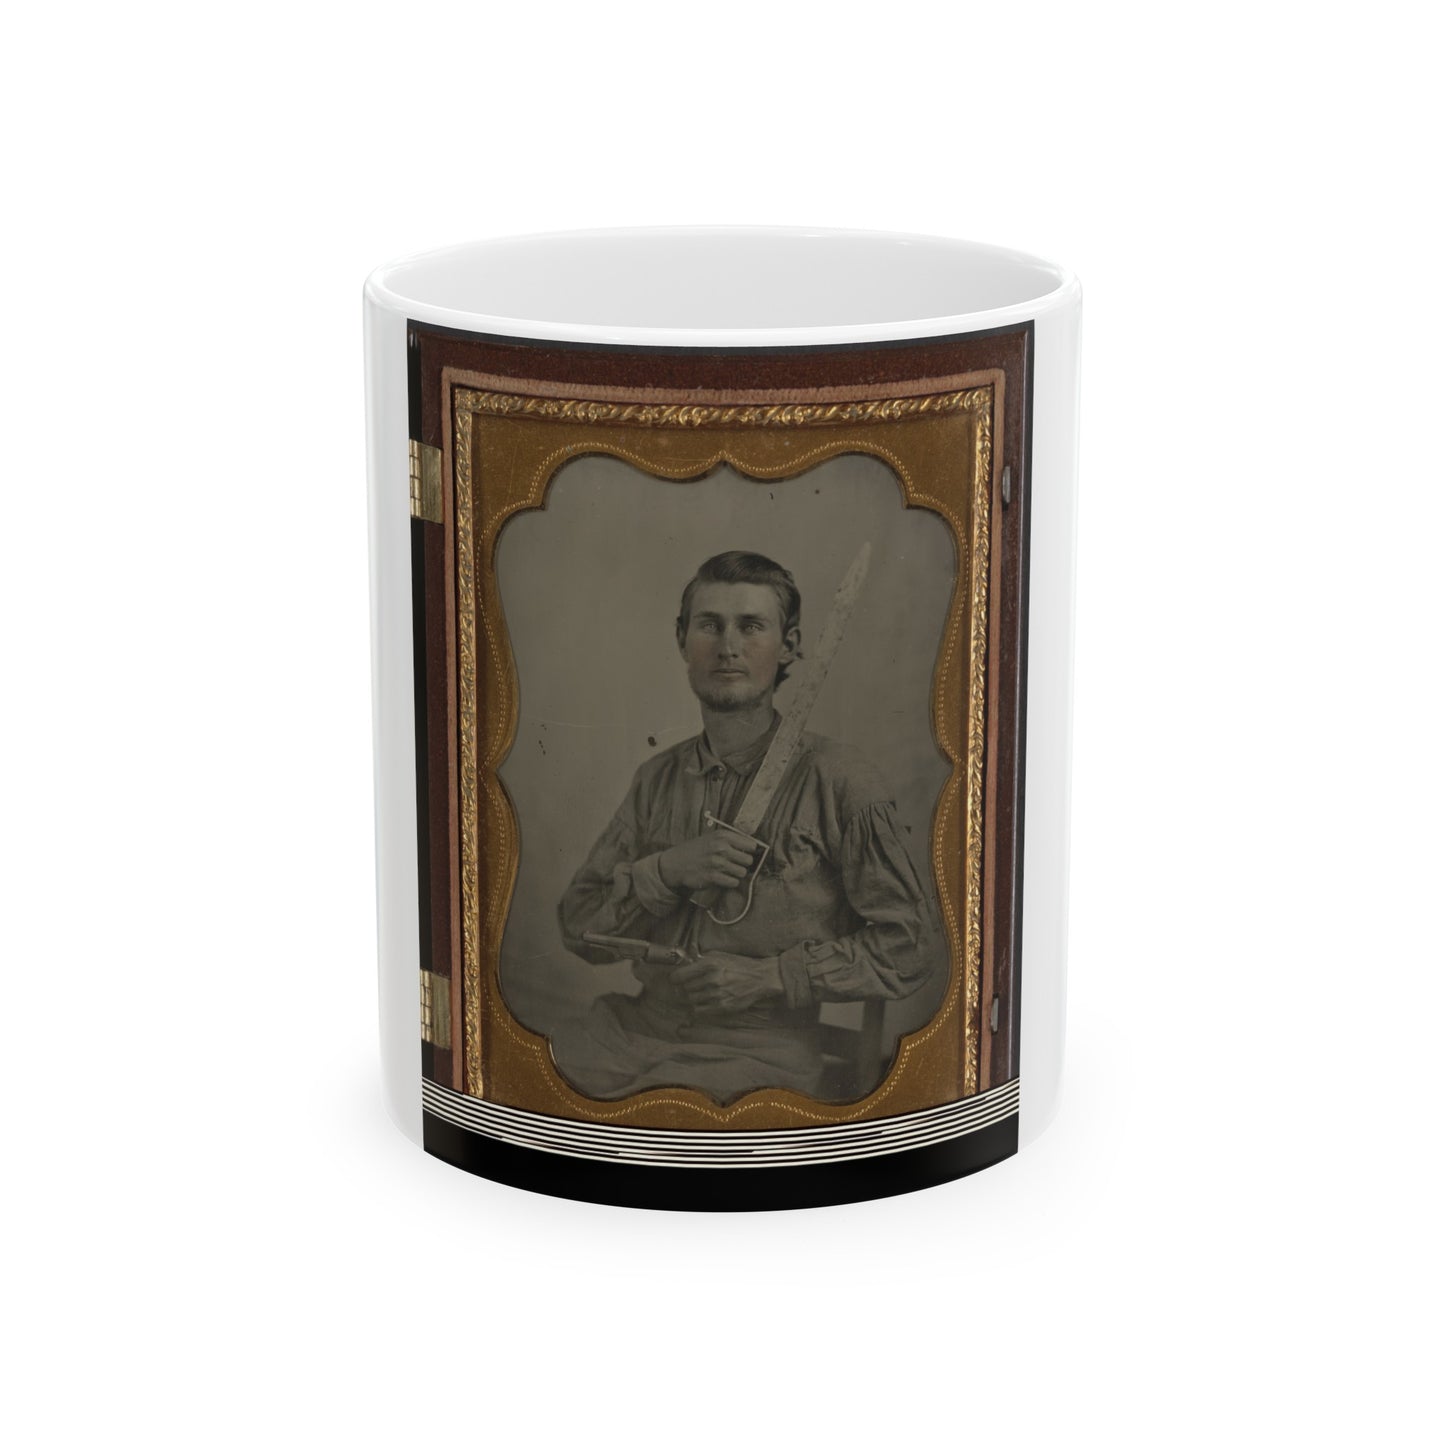 Private Simeon J. Crews Of Co. F, 7th Texas Cavalry Regiment, With Cut Down Saber And Revolver (U.S. Civil War) White Coffee Mug